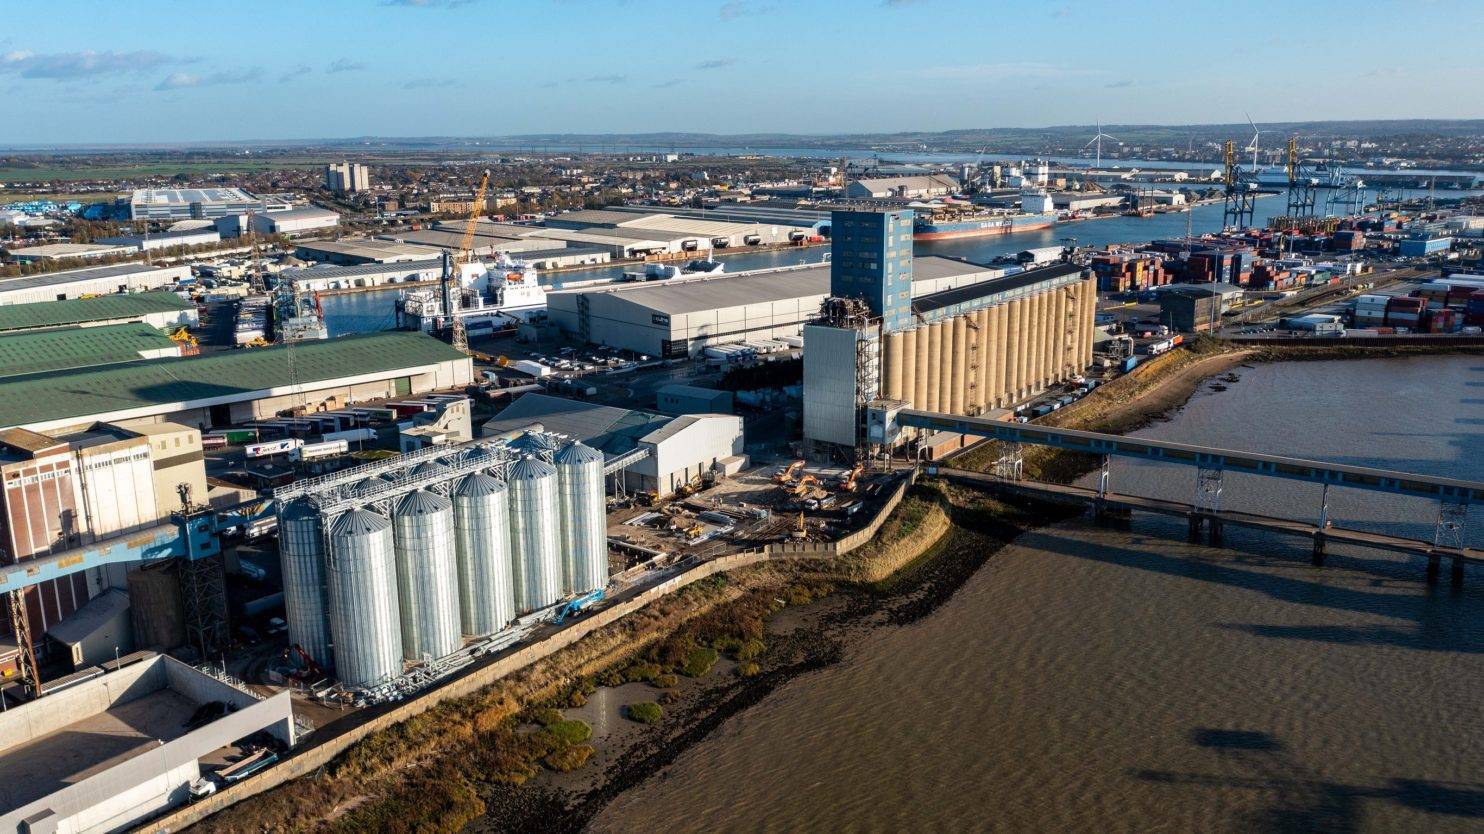 Tilbury’s Grain Terminal completes metal silo rebuild